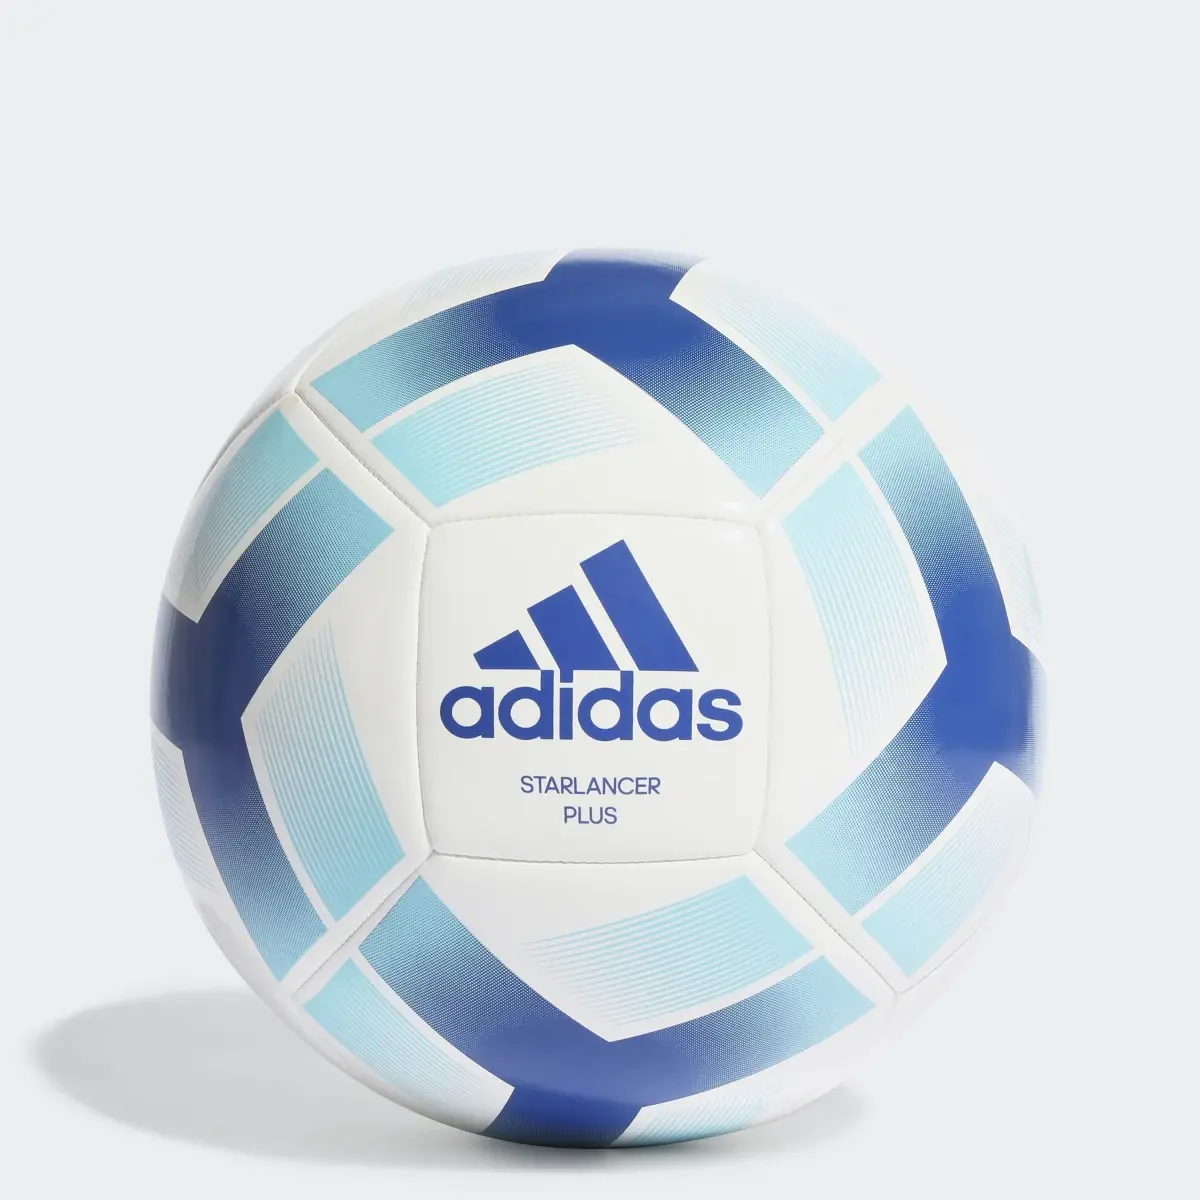 Adidas Starlancer Plus Football. 1